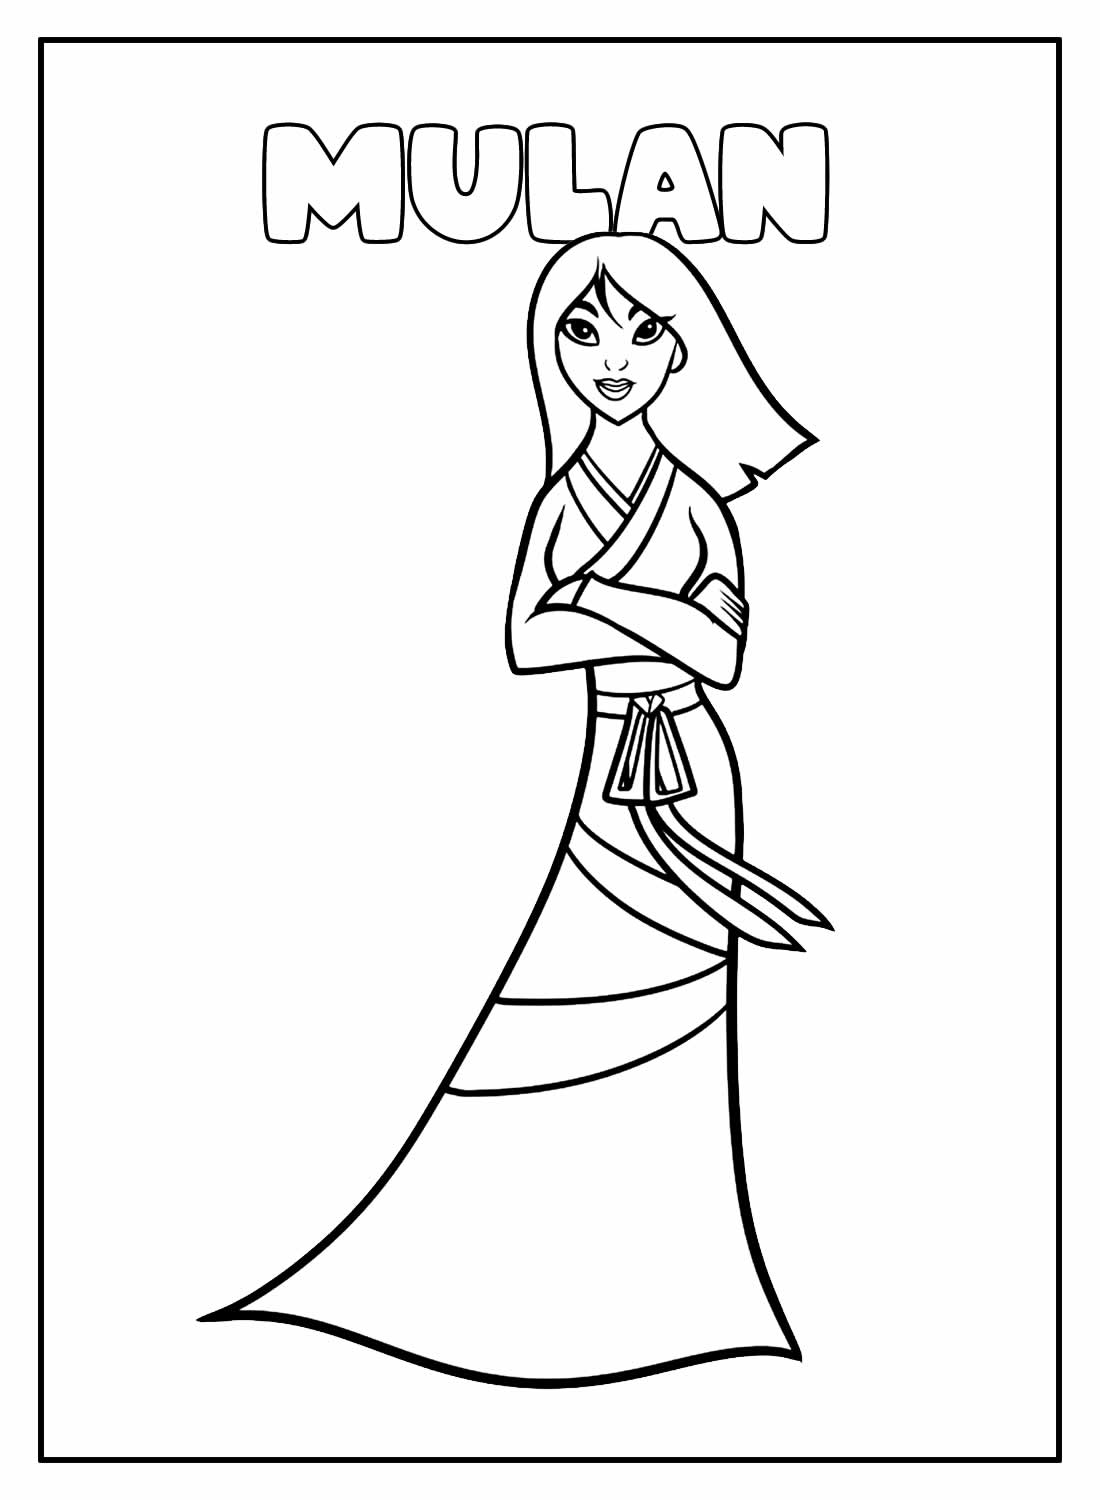 Desenho Educativo de Mulan para colorir